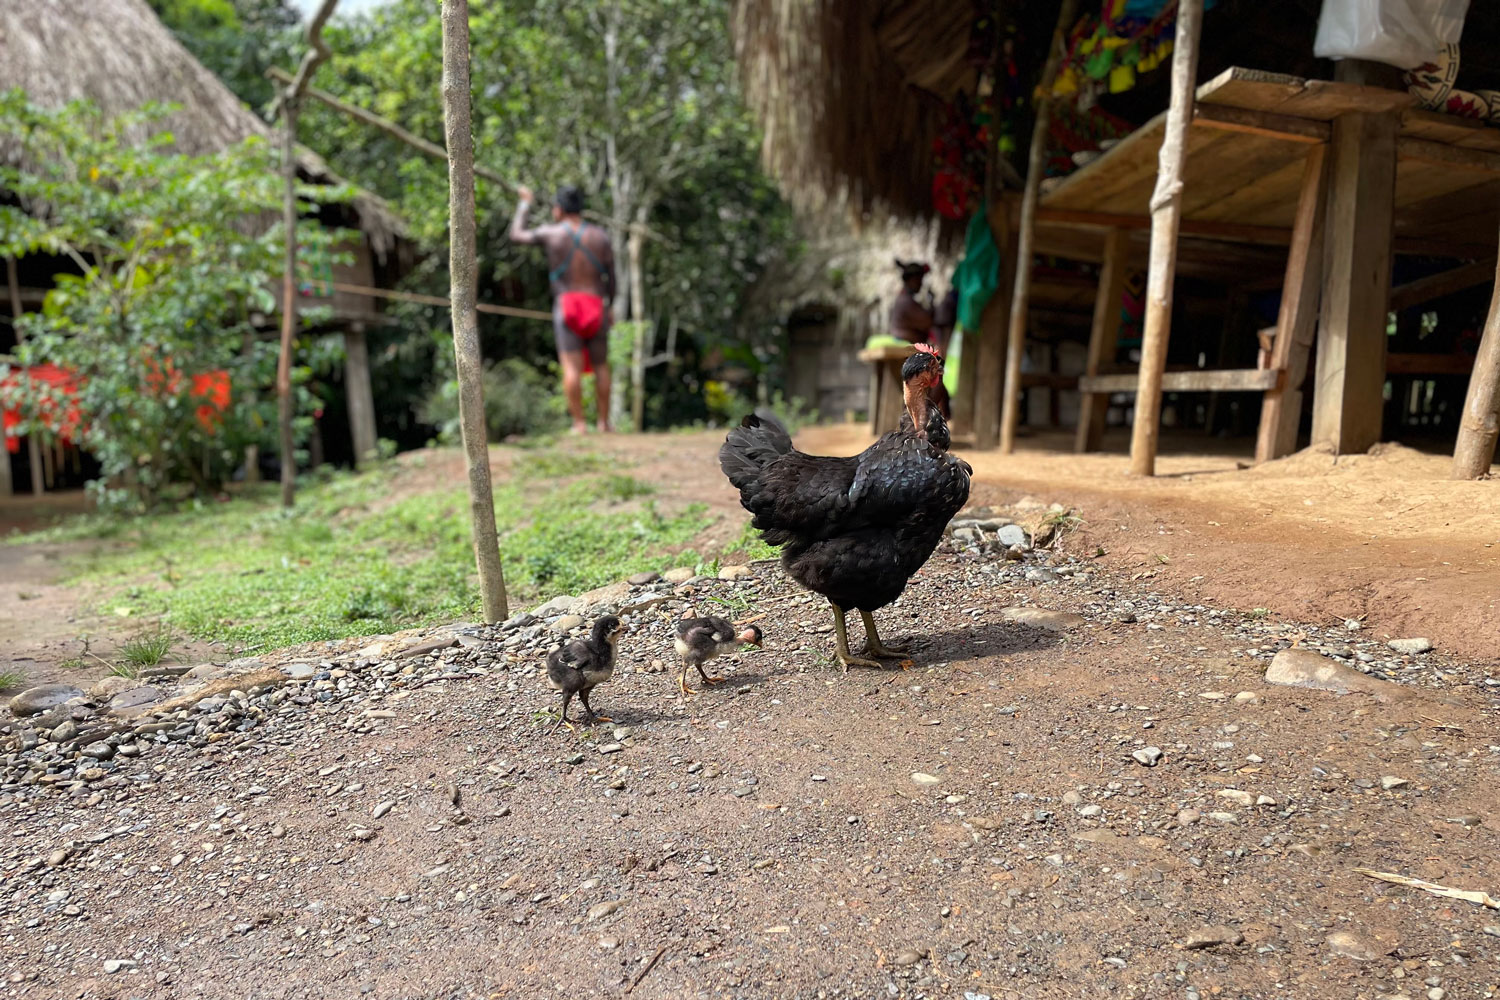 Panamanian chickens